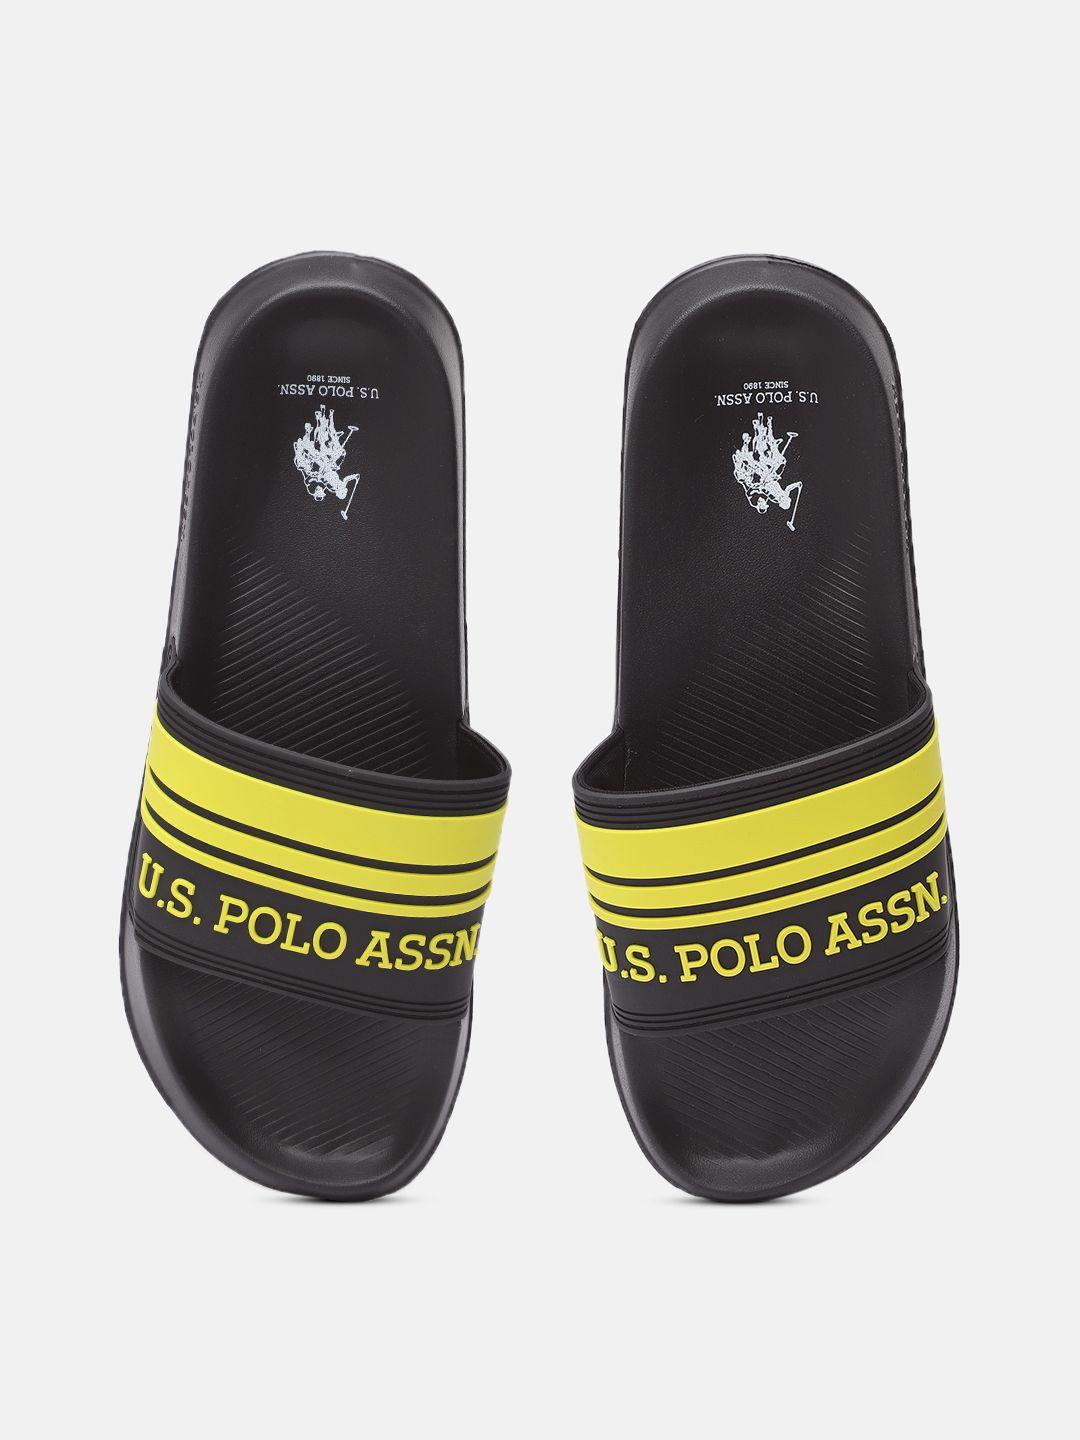 u.s. polo assn. men brand logo printed sliders